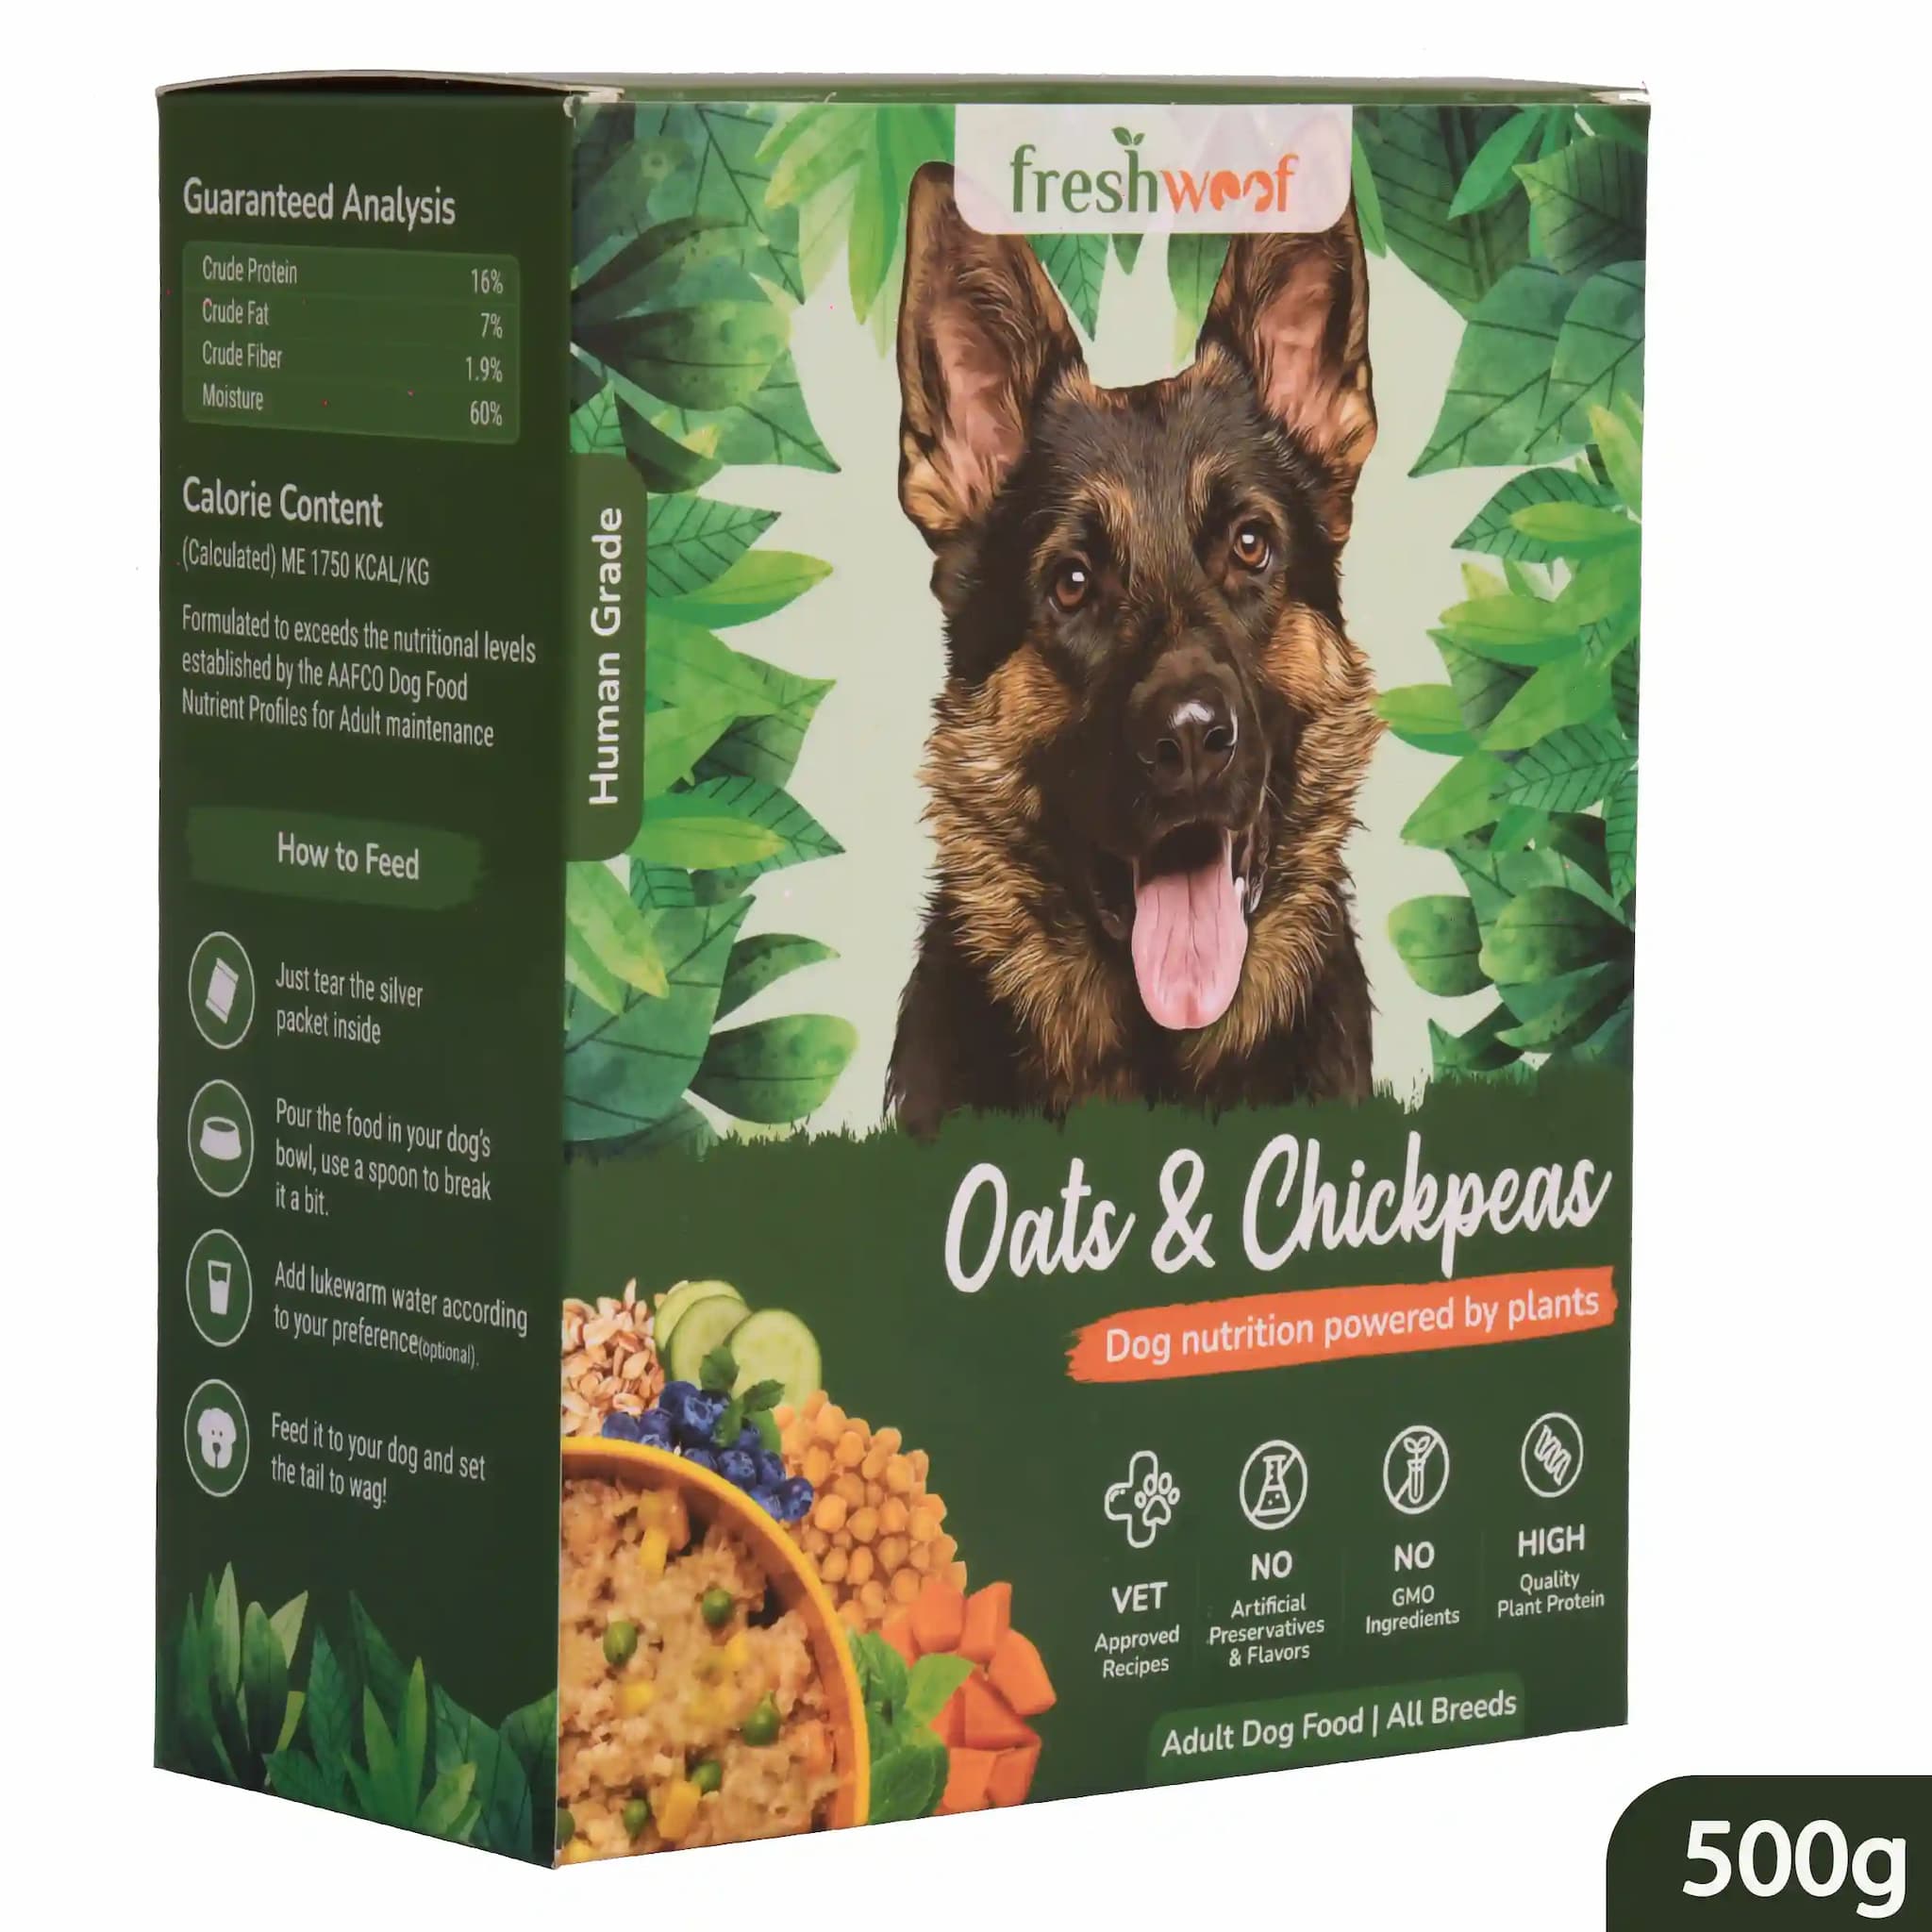 All Natural Vegetarian/Vegan Wet Dog Food - Oats & Chickpeas